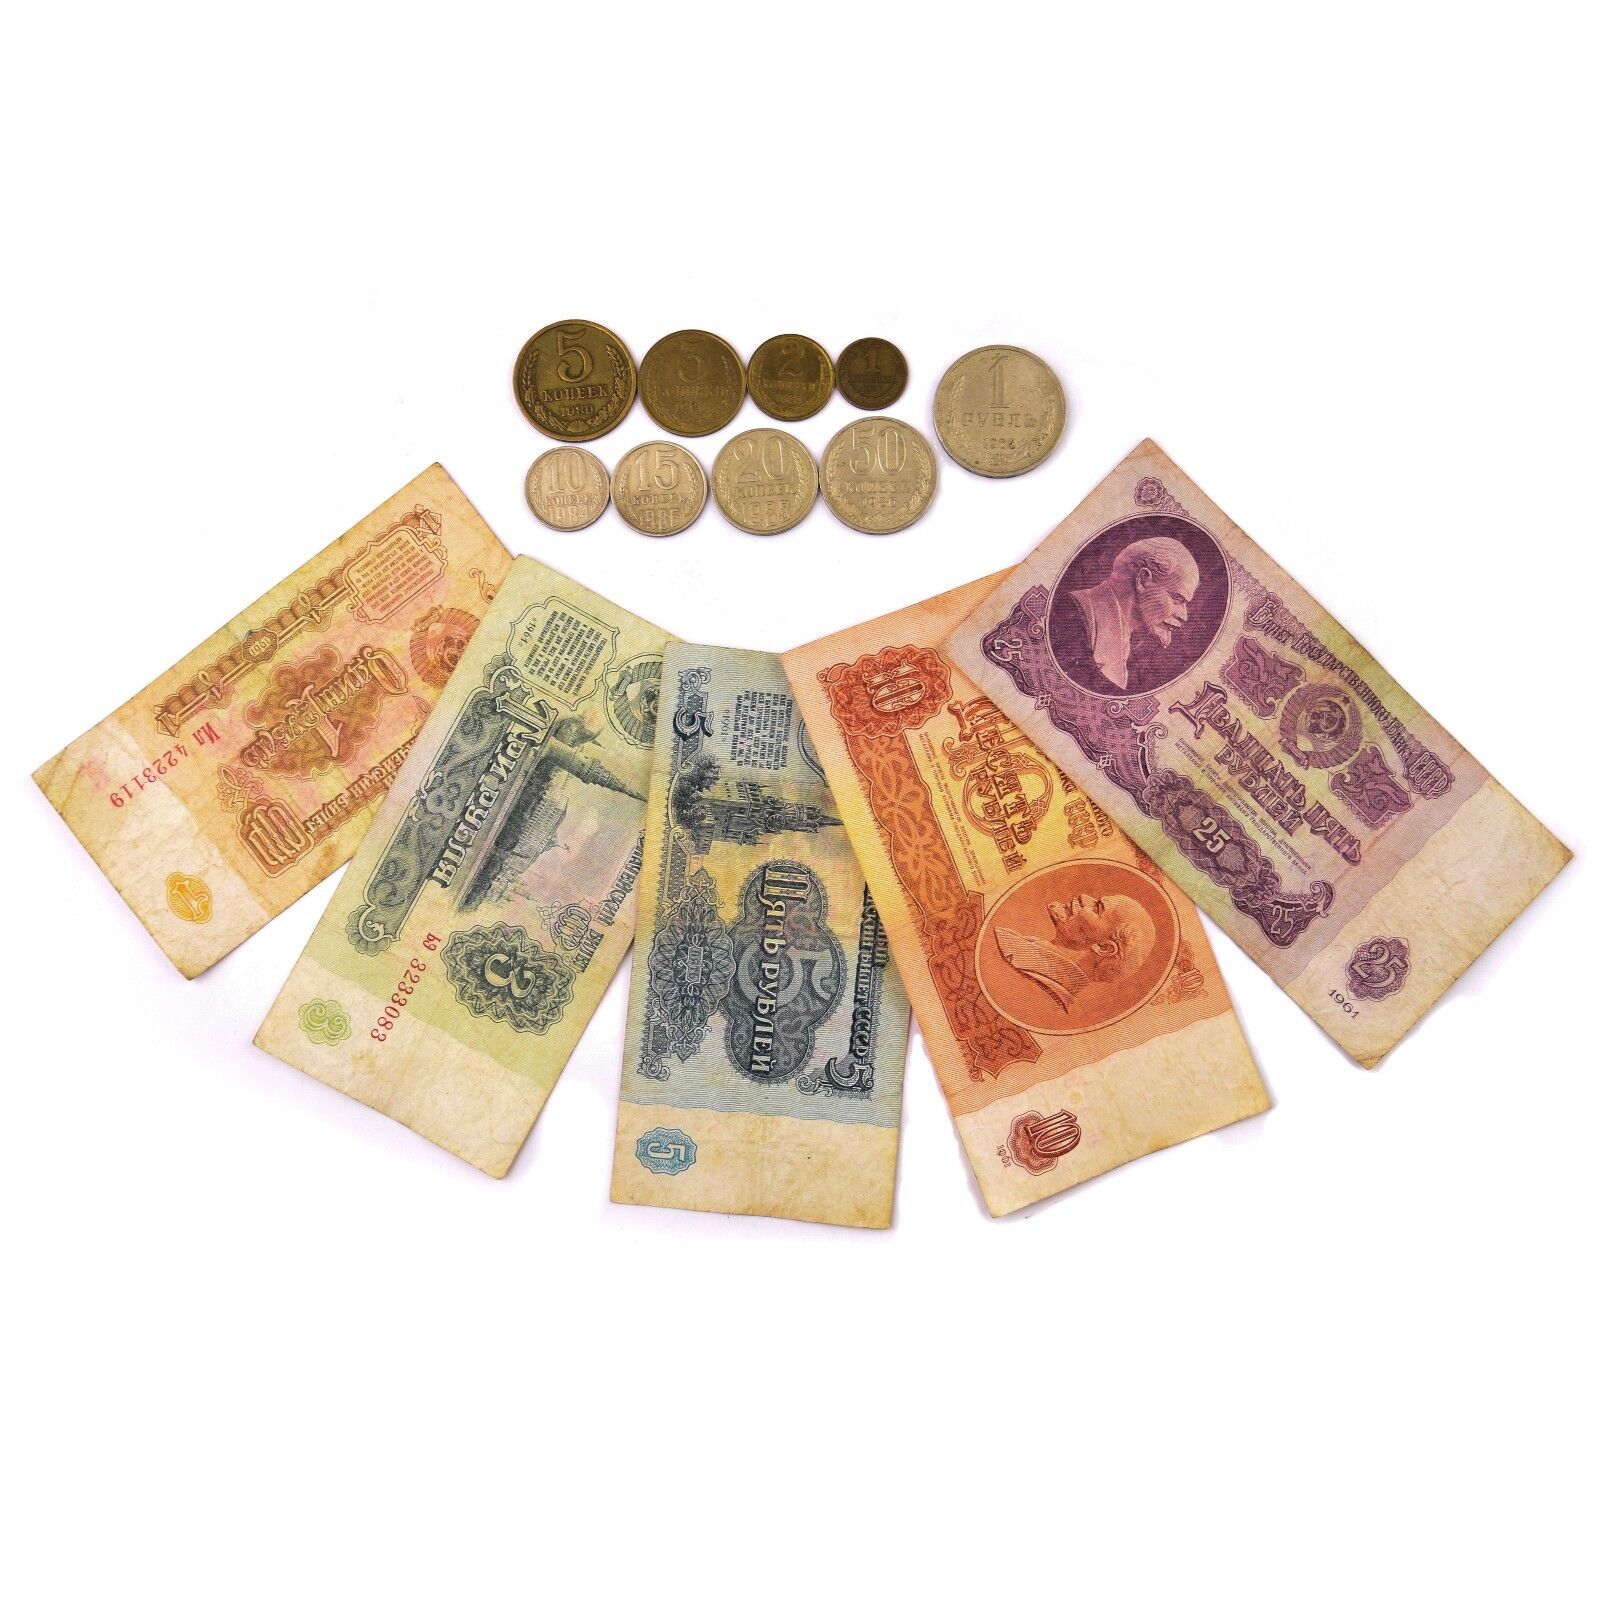 USSR FULL SET 9 SOVIET RUSSIAN COINS KOPECKS + 5 RUBLE BANKNOTES 1961 COLLECTION Без бренда - фотография #2